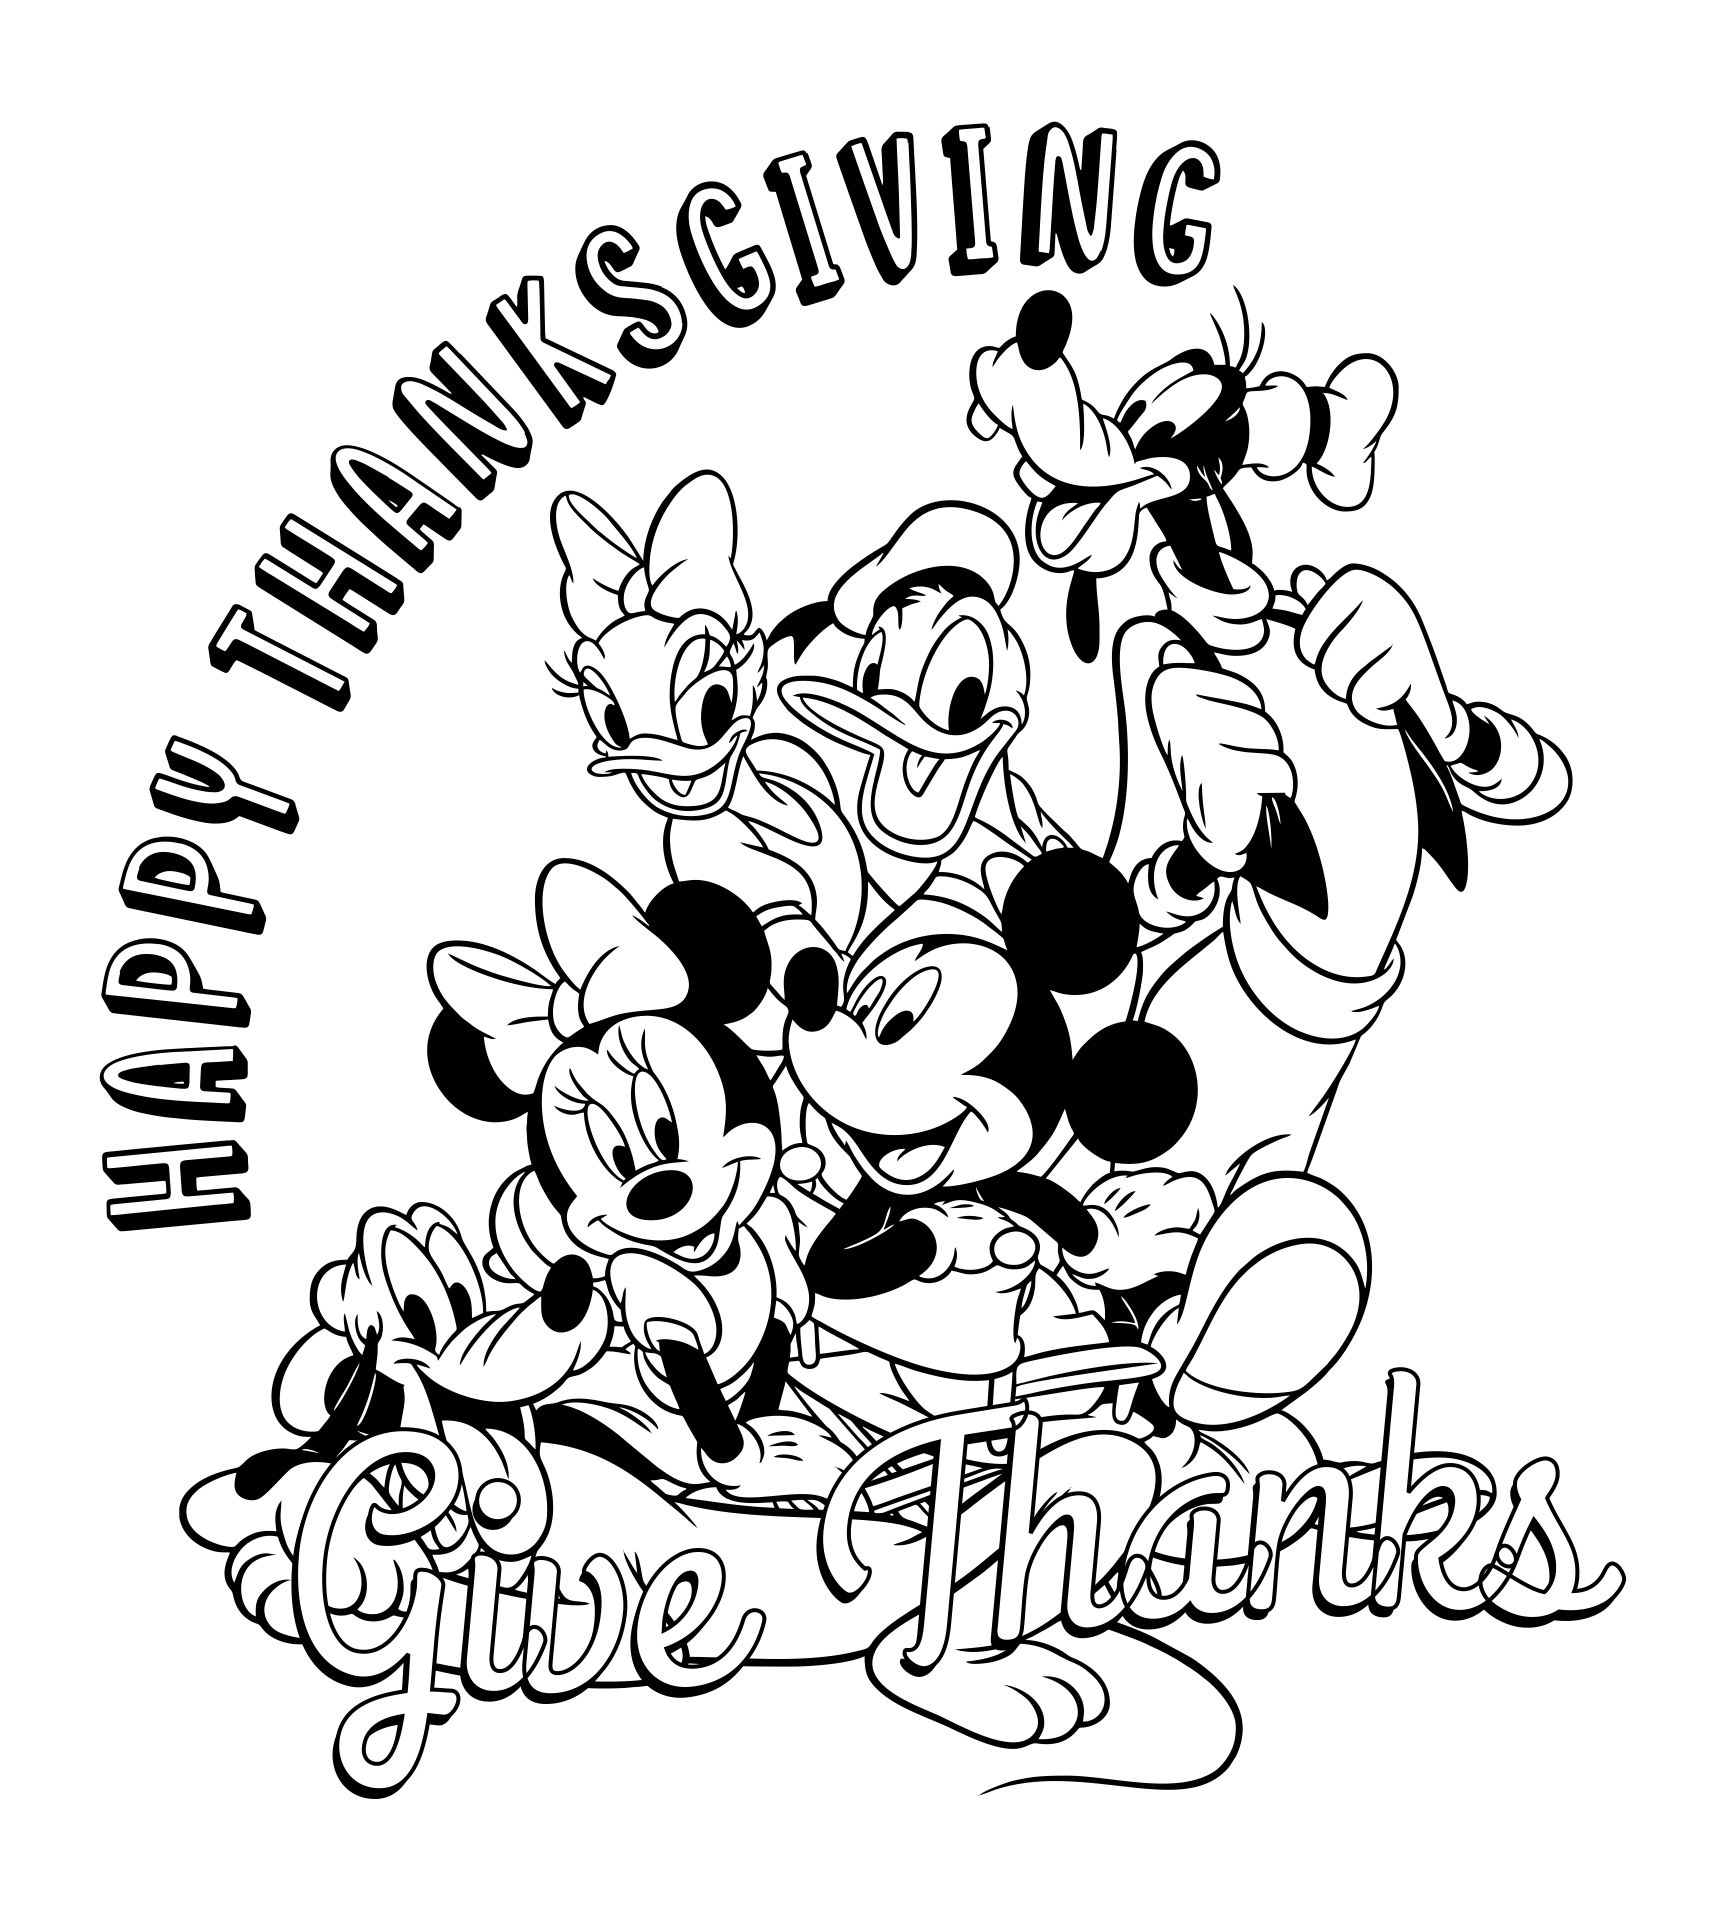 20 Best Disney Thanksgiving Coloring Pages Printables   printablee.com